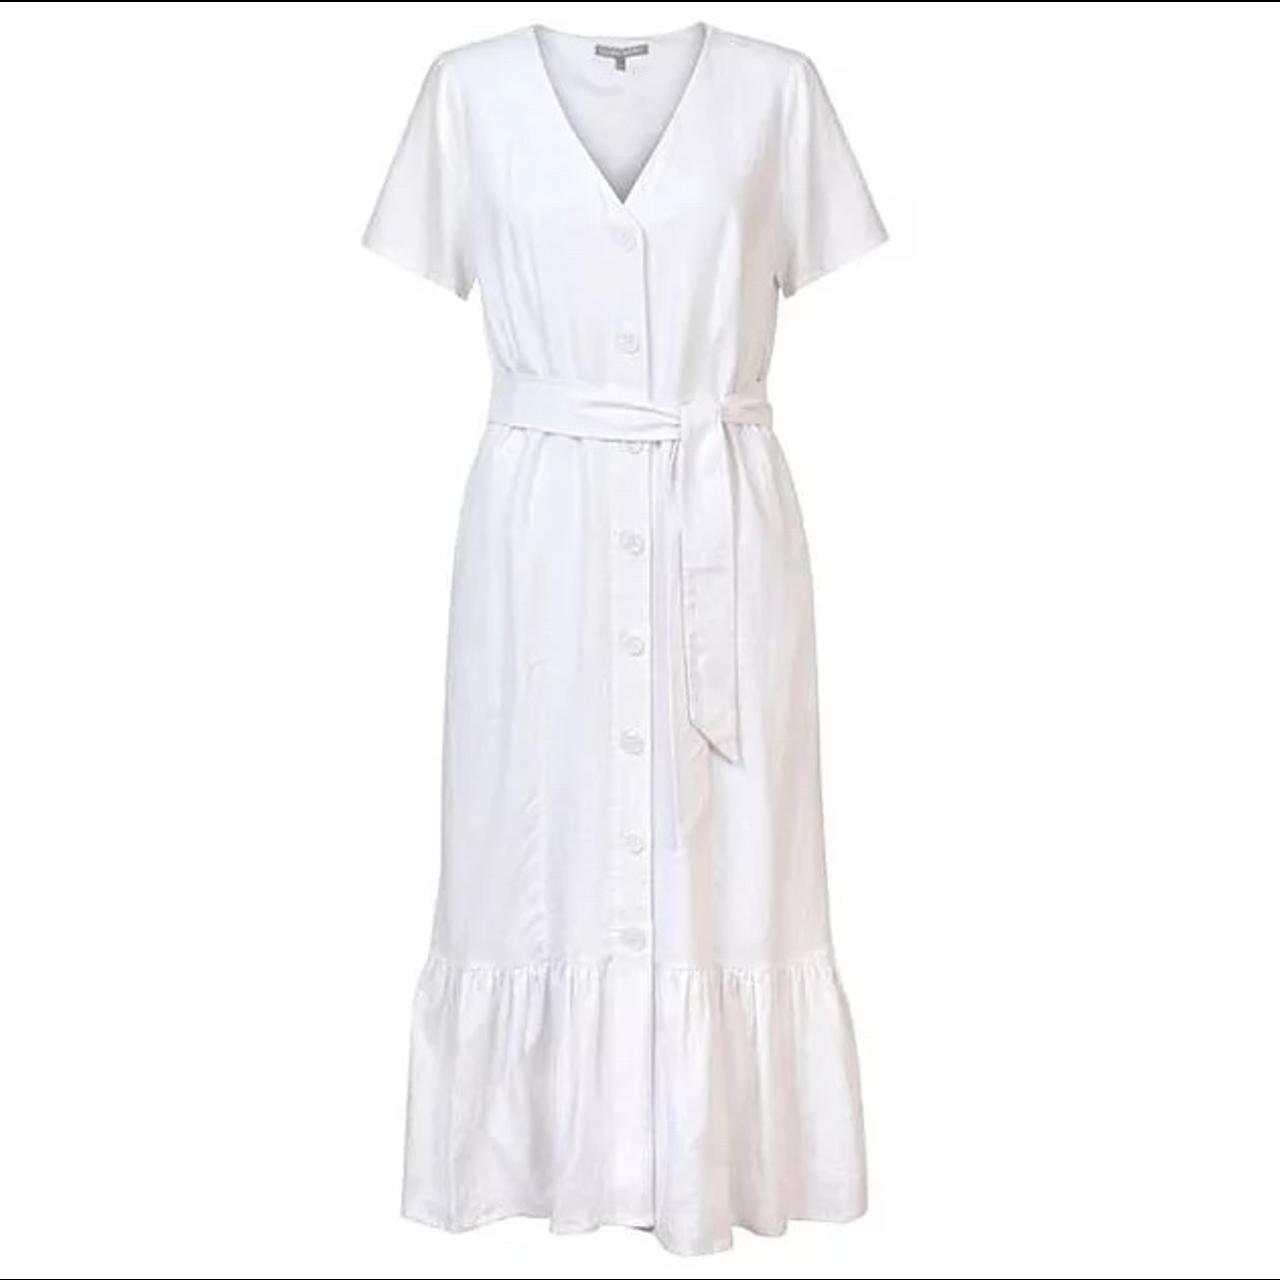 Oliver Bonas white linen midi dress 🏔 free... - Depop